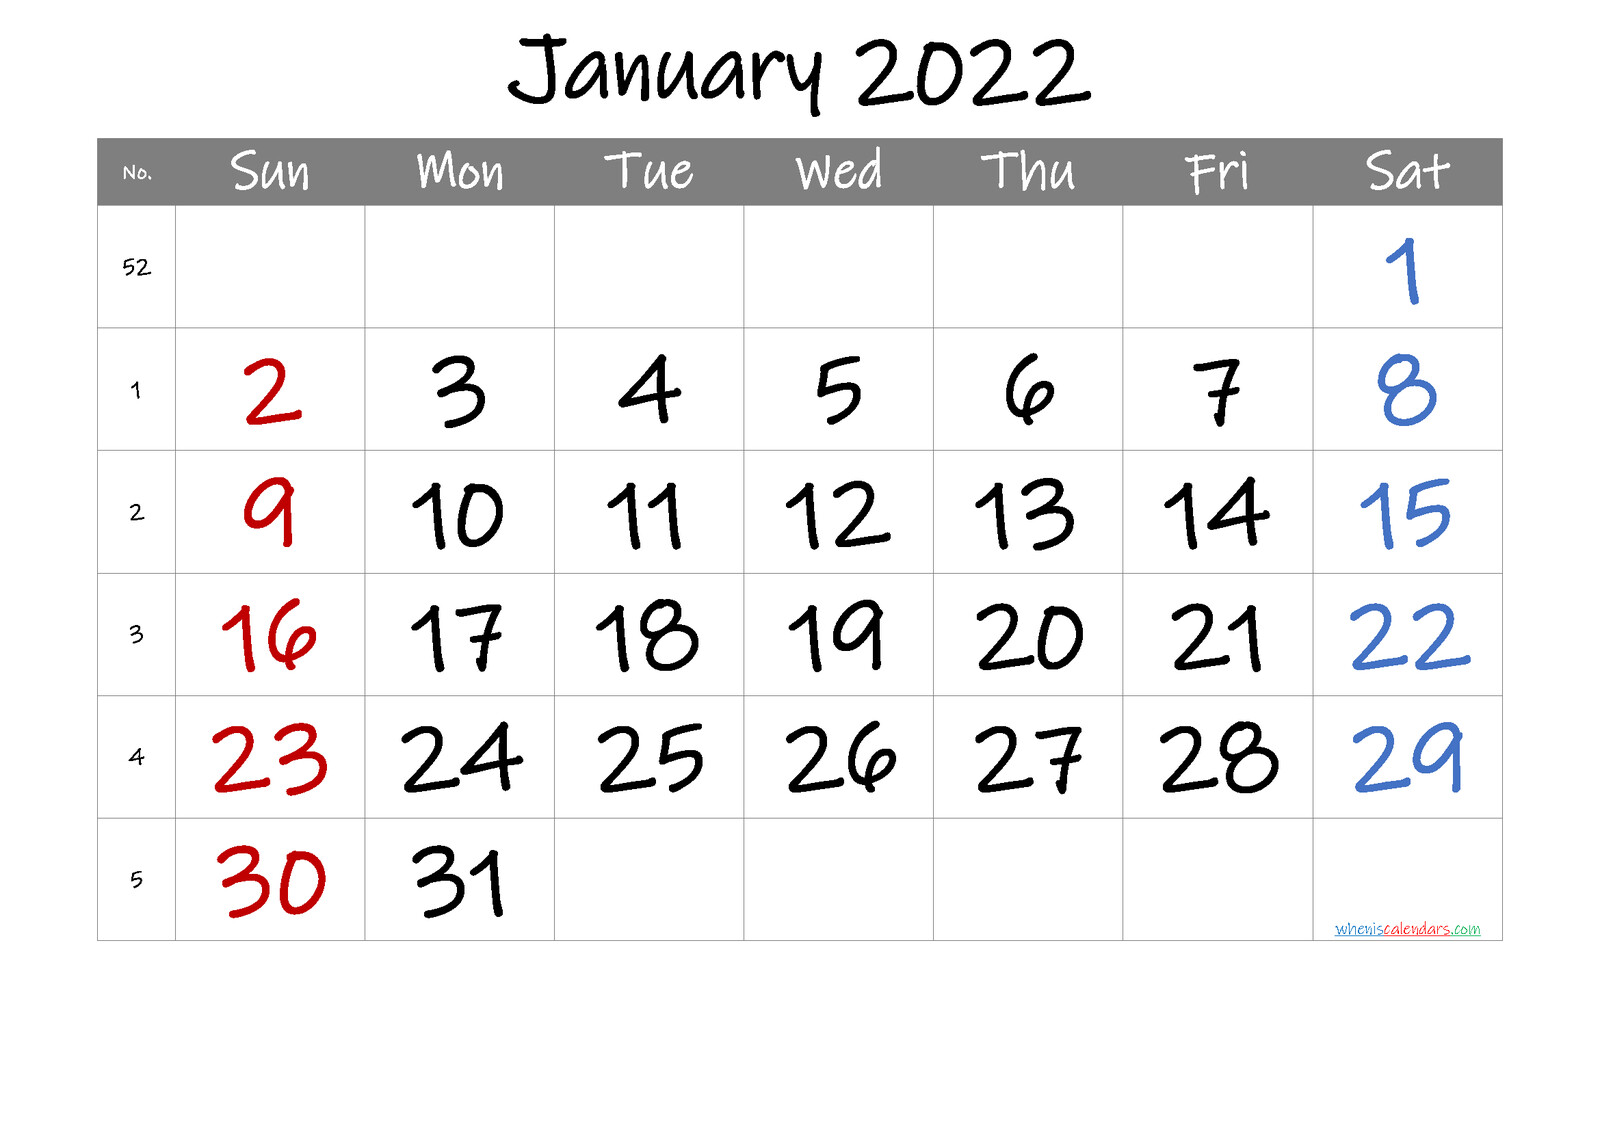 mateo pedersen blank january 2022 calendar printable